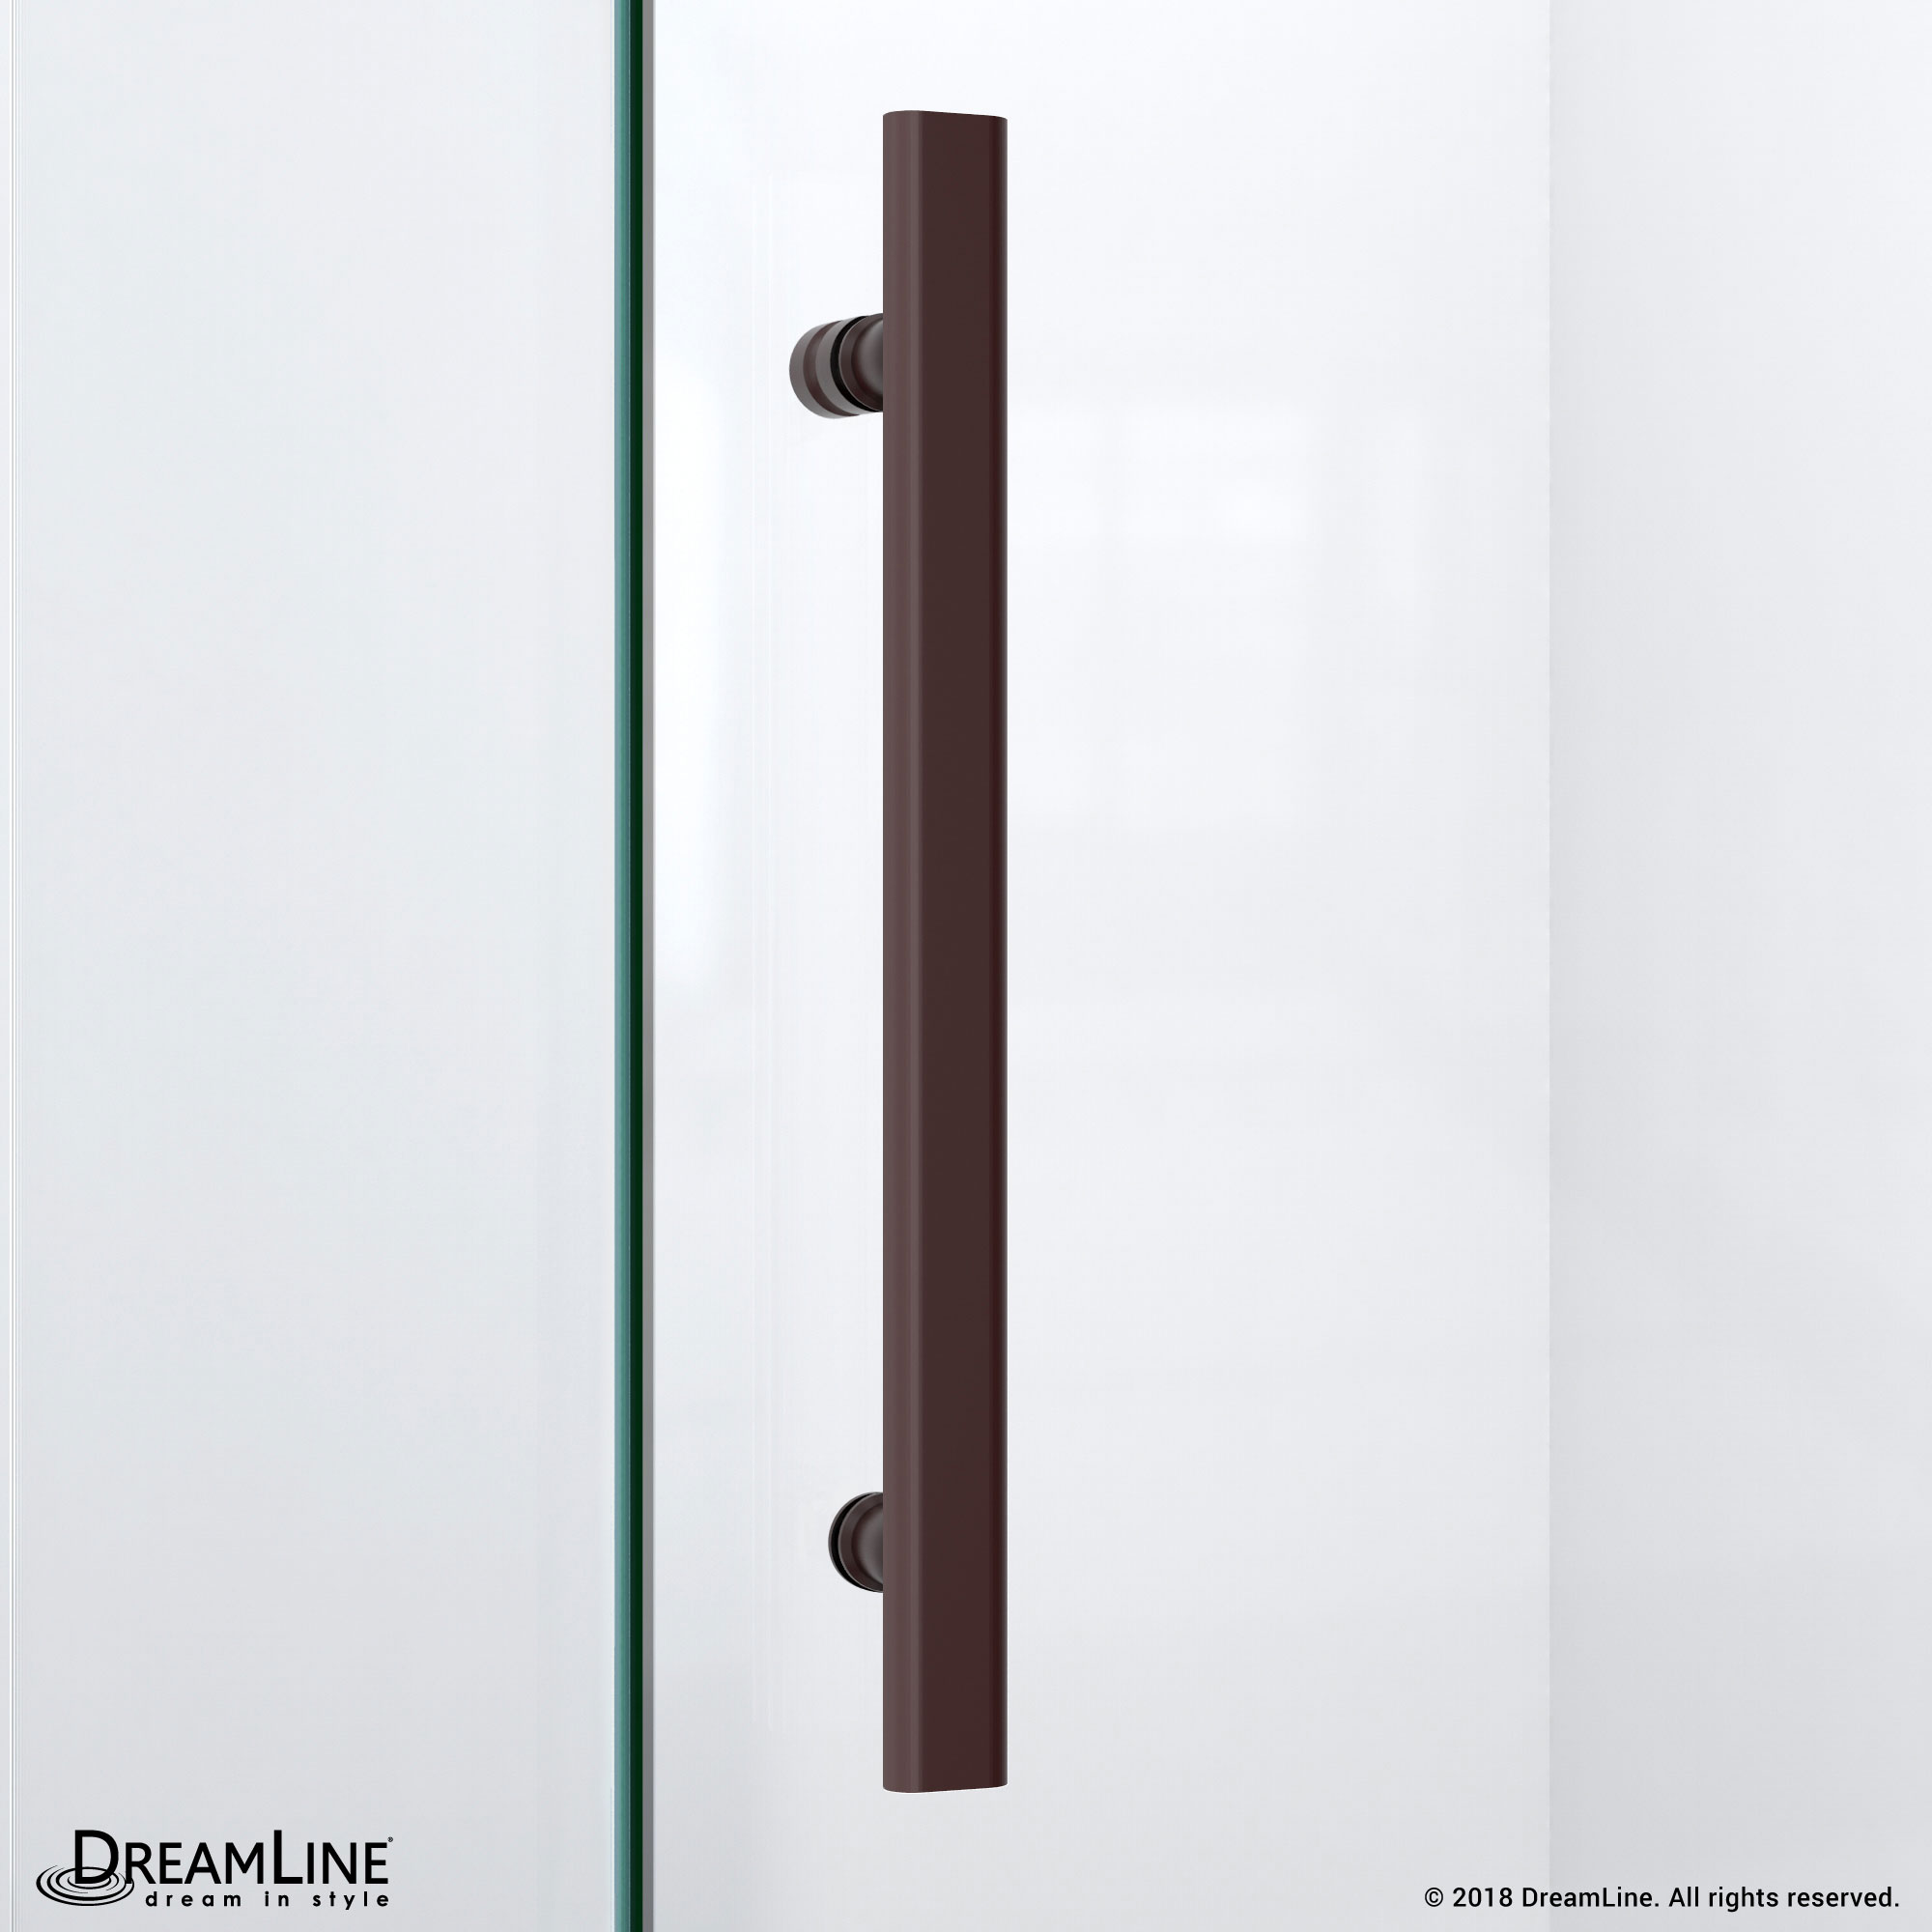 PrismLux 40-3/8" x 40-3/8" x 72" Hinged Shower Enclosure, Oil Rubbed Bronze